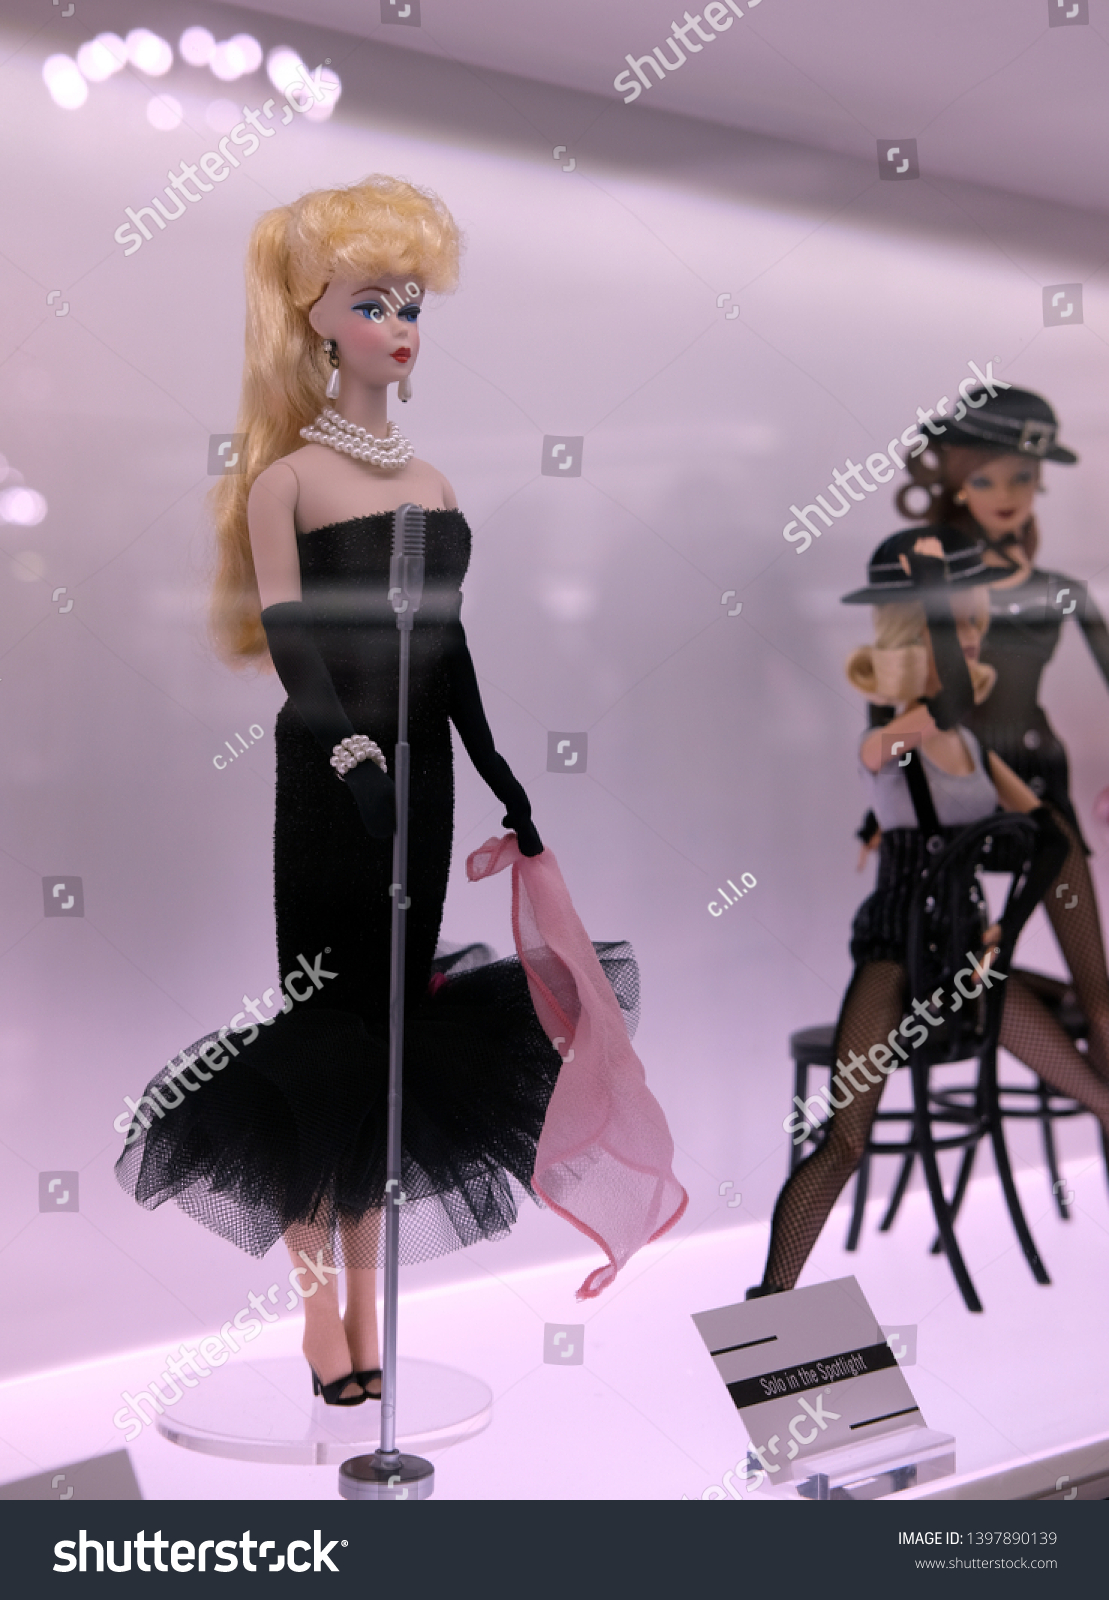 exposition barbie 2019